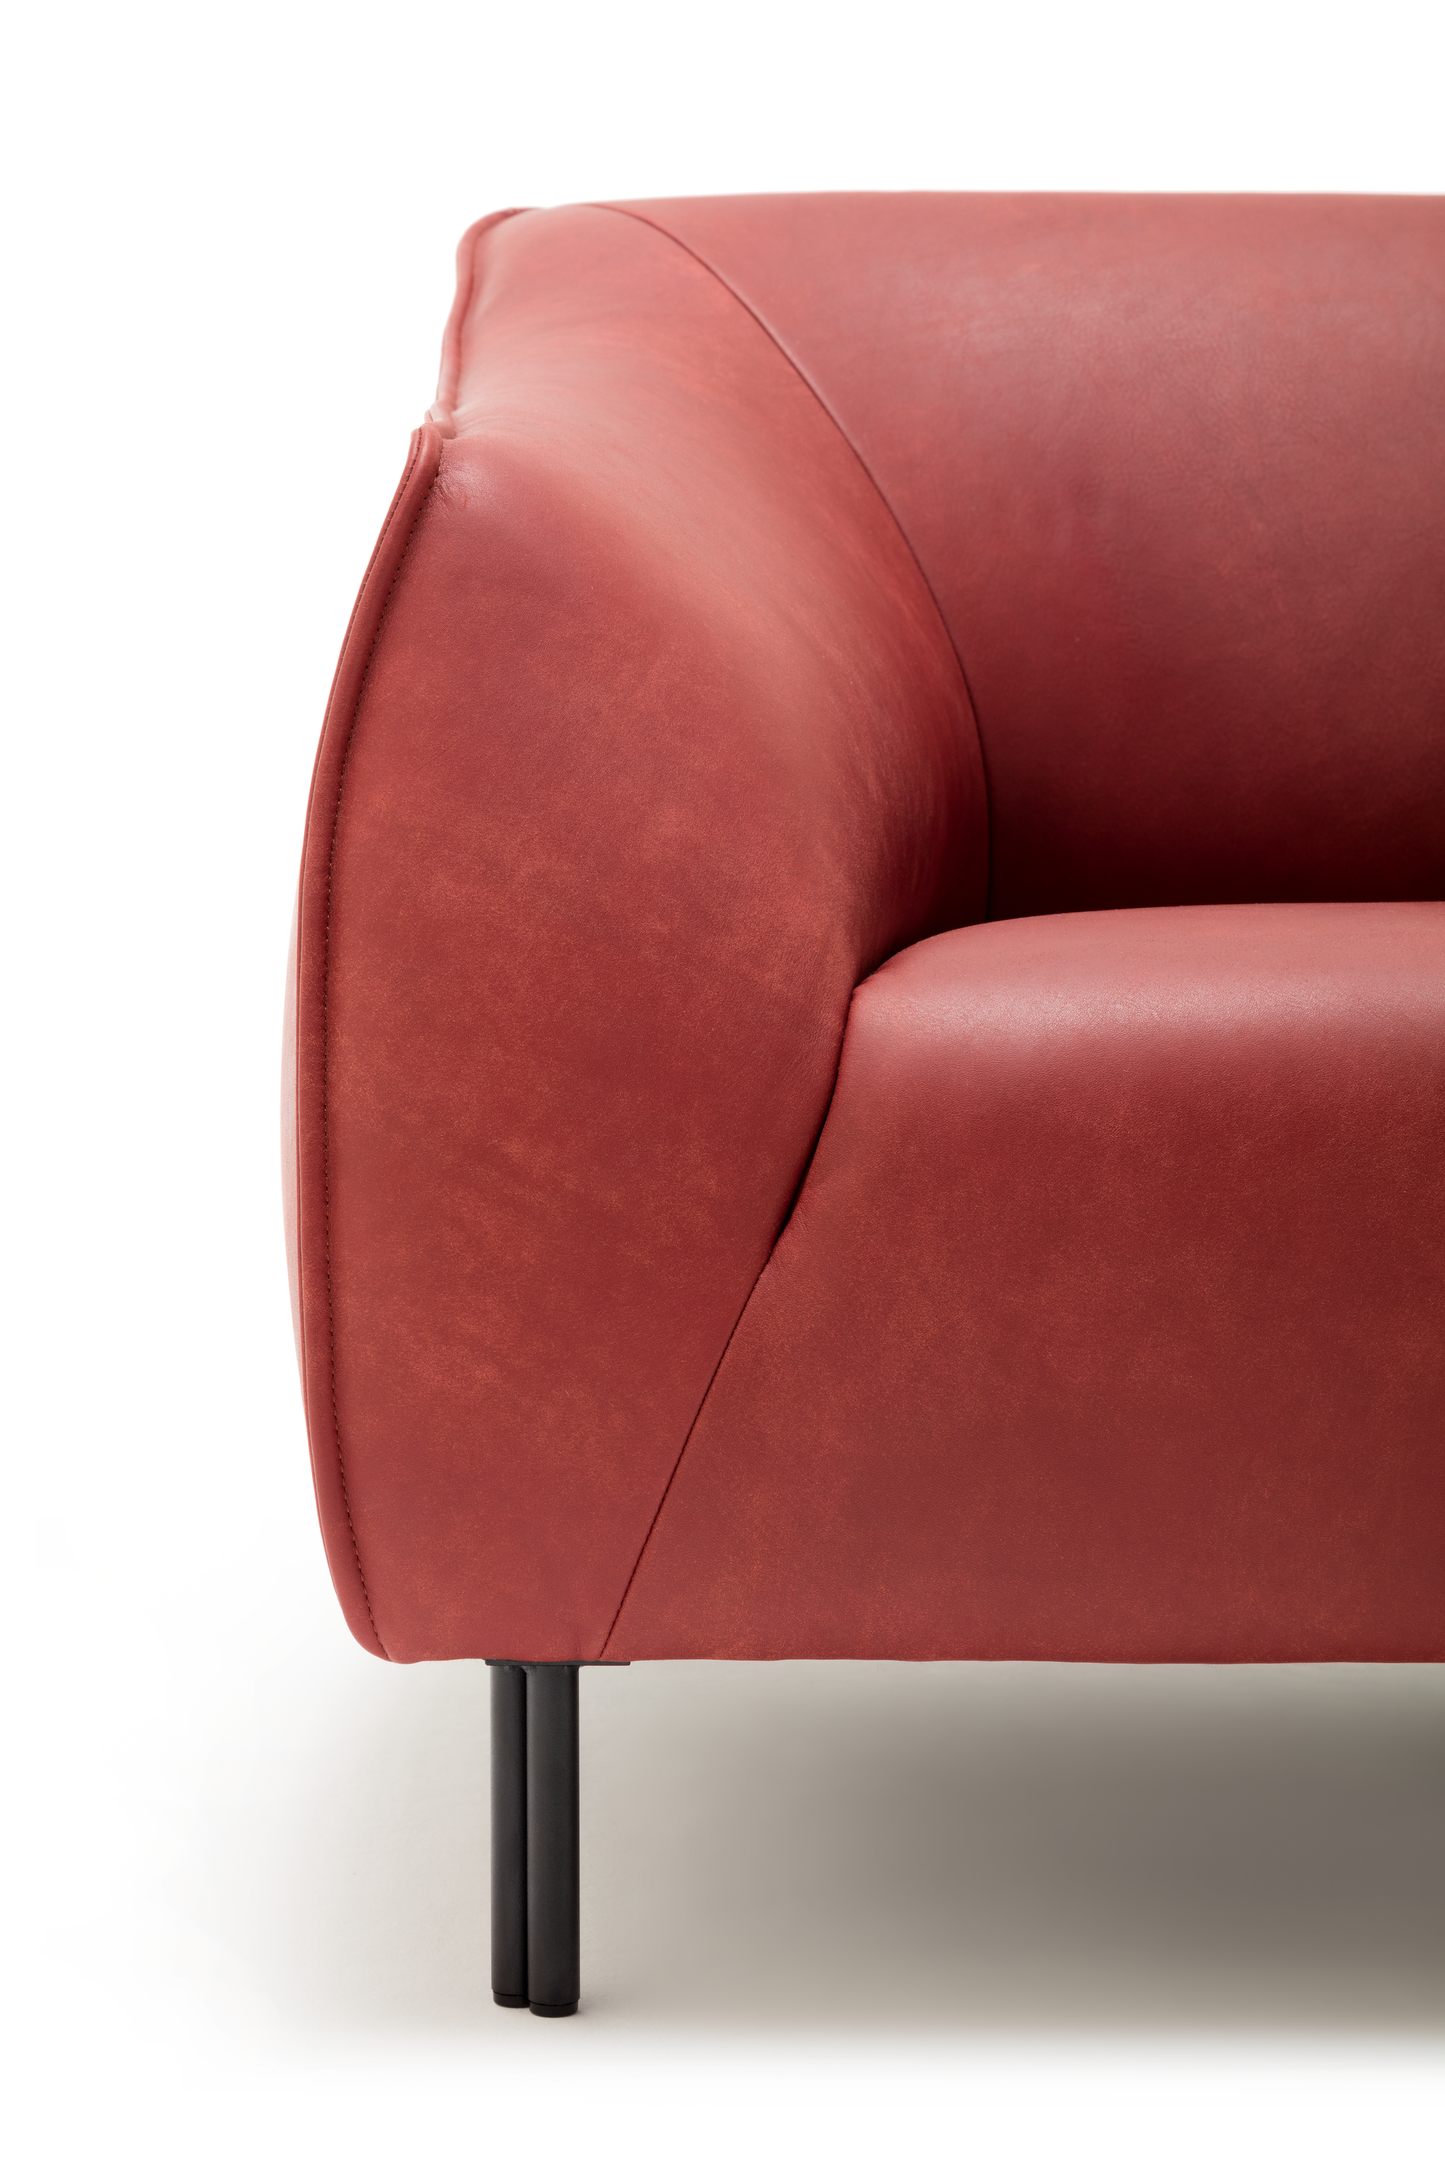 Freistil Rolf Benz 132 sofa red leather arm detail